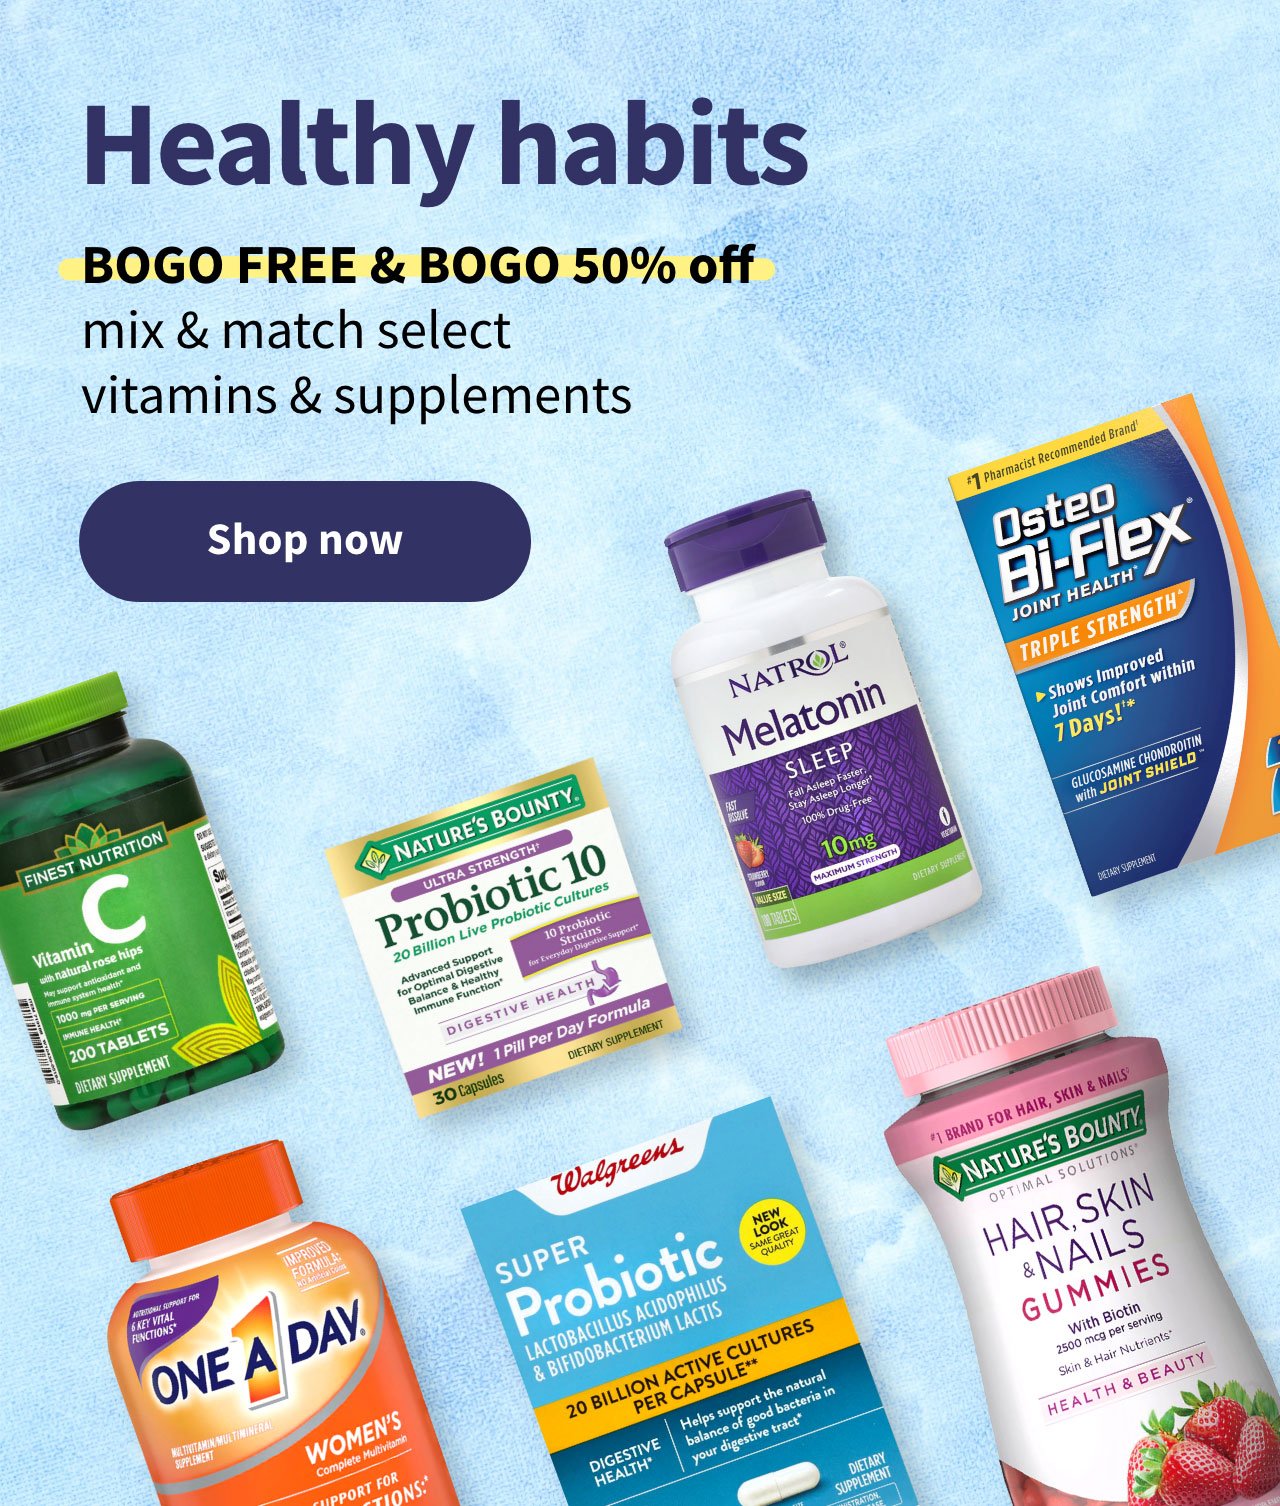 Healthy habits. BOGO FREE & BOGO 50% off mix & match select vitamins & supplements. Shop now.